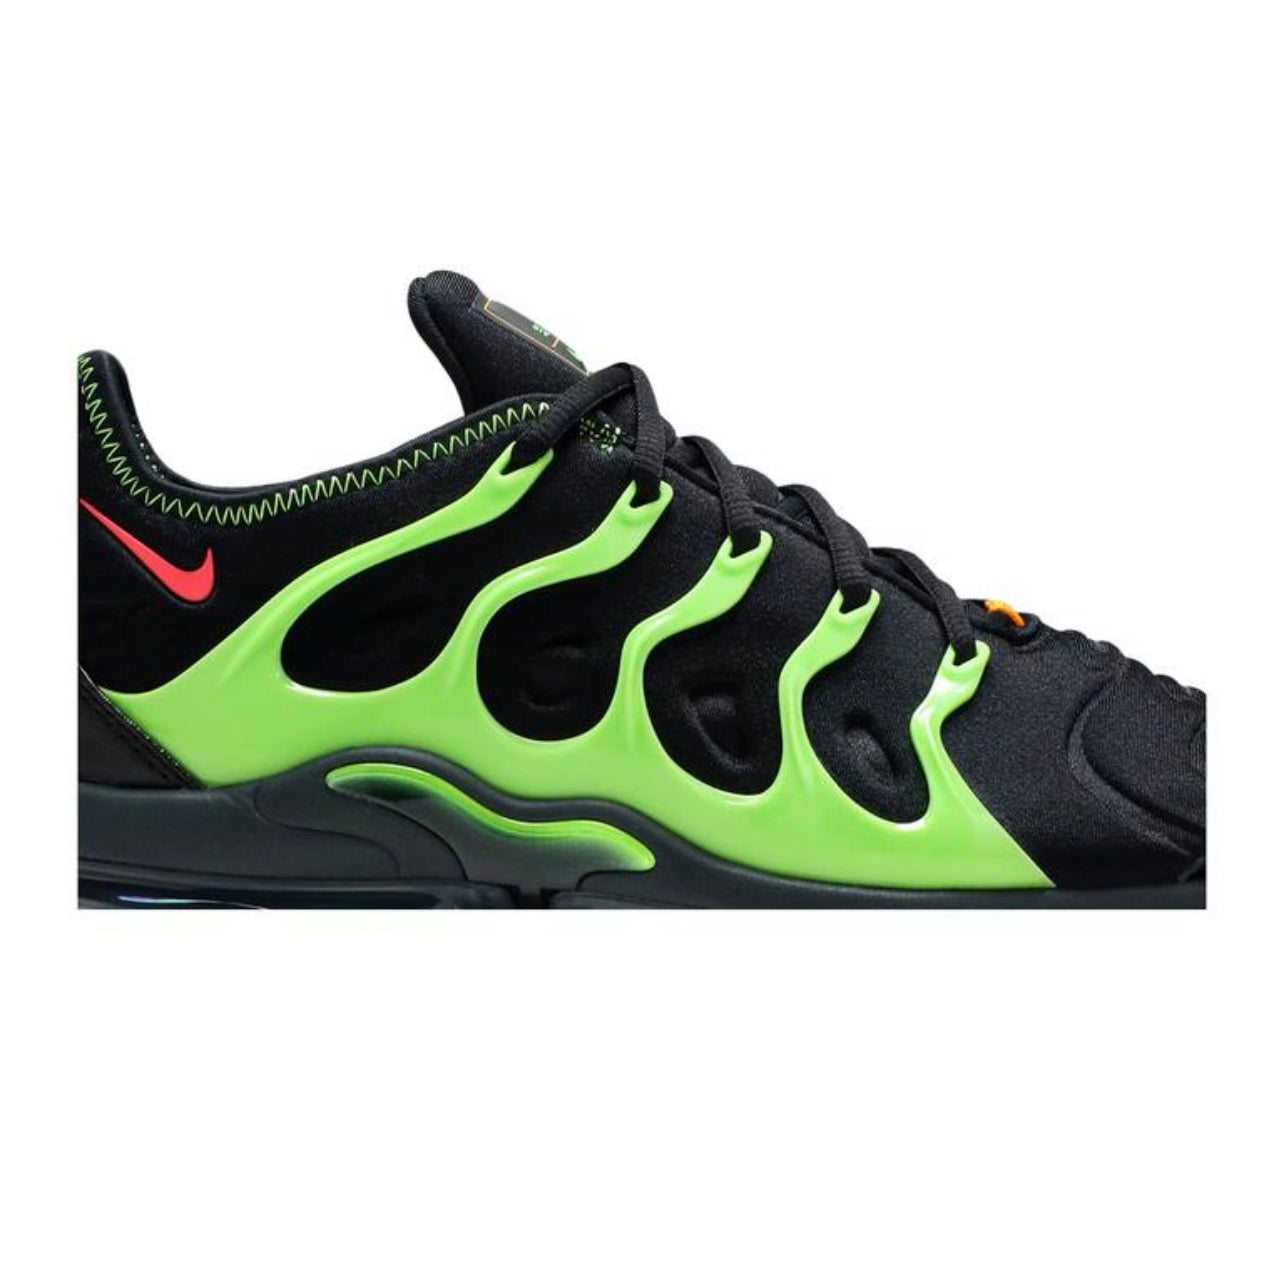 Nike Air Vapormax Plus "Lime Green"